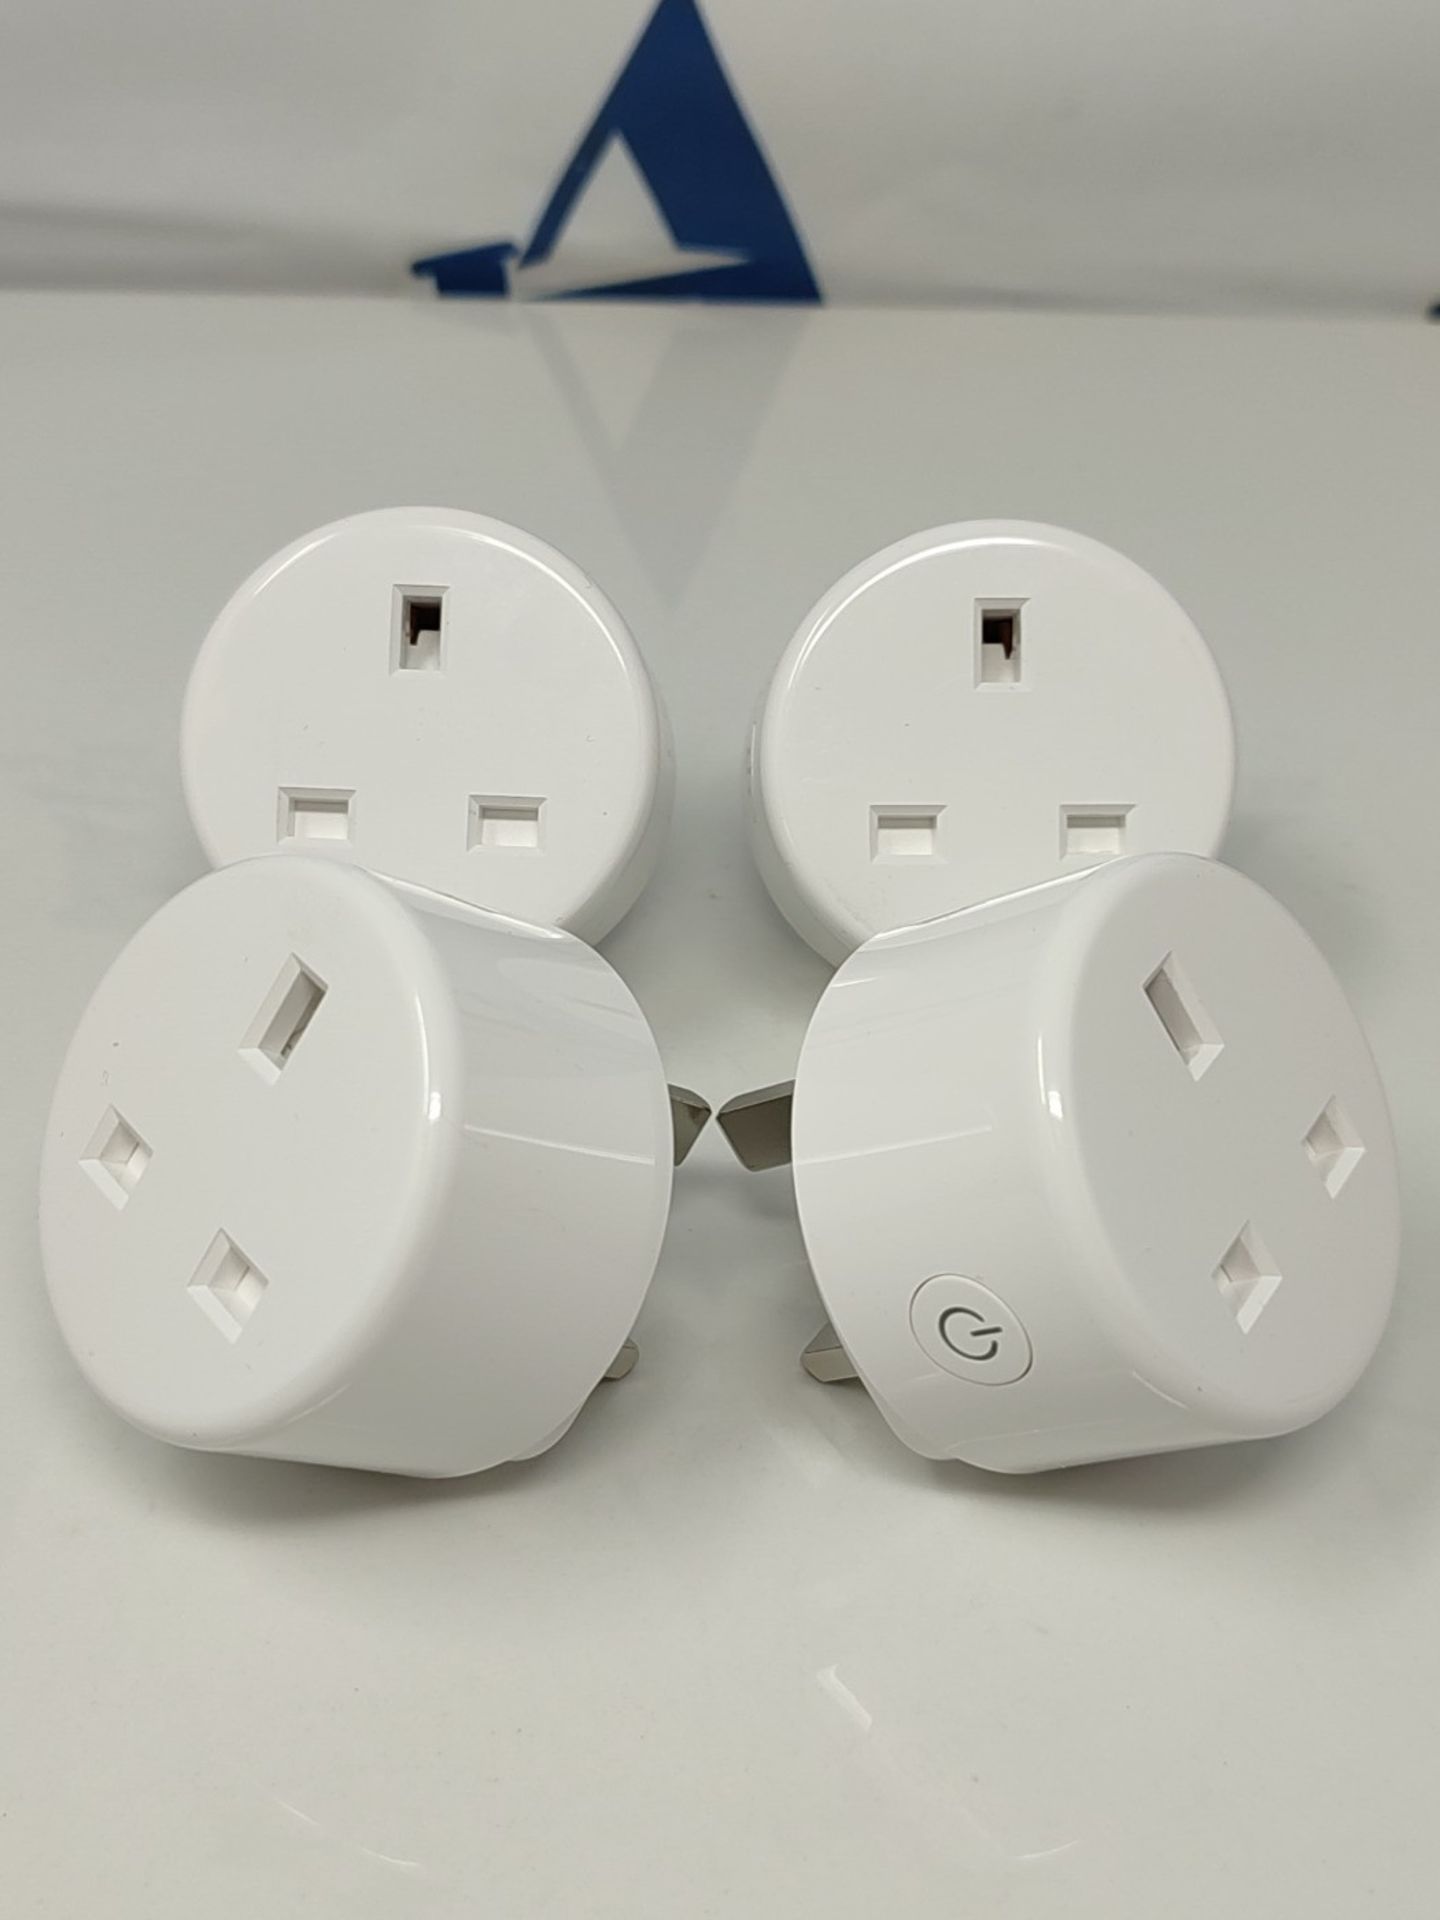 OHMAX Smart Plug, Energy Monitoring Smart Wifi Plug Compatible with Alexa, Google Home - Image 3 of 3